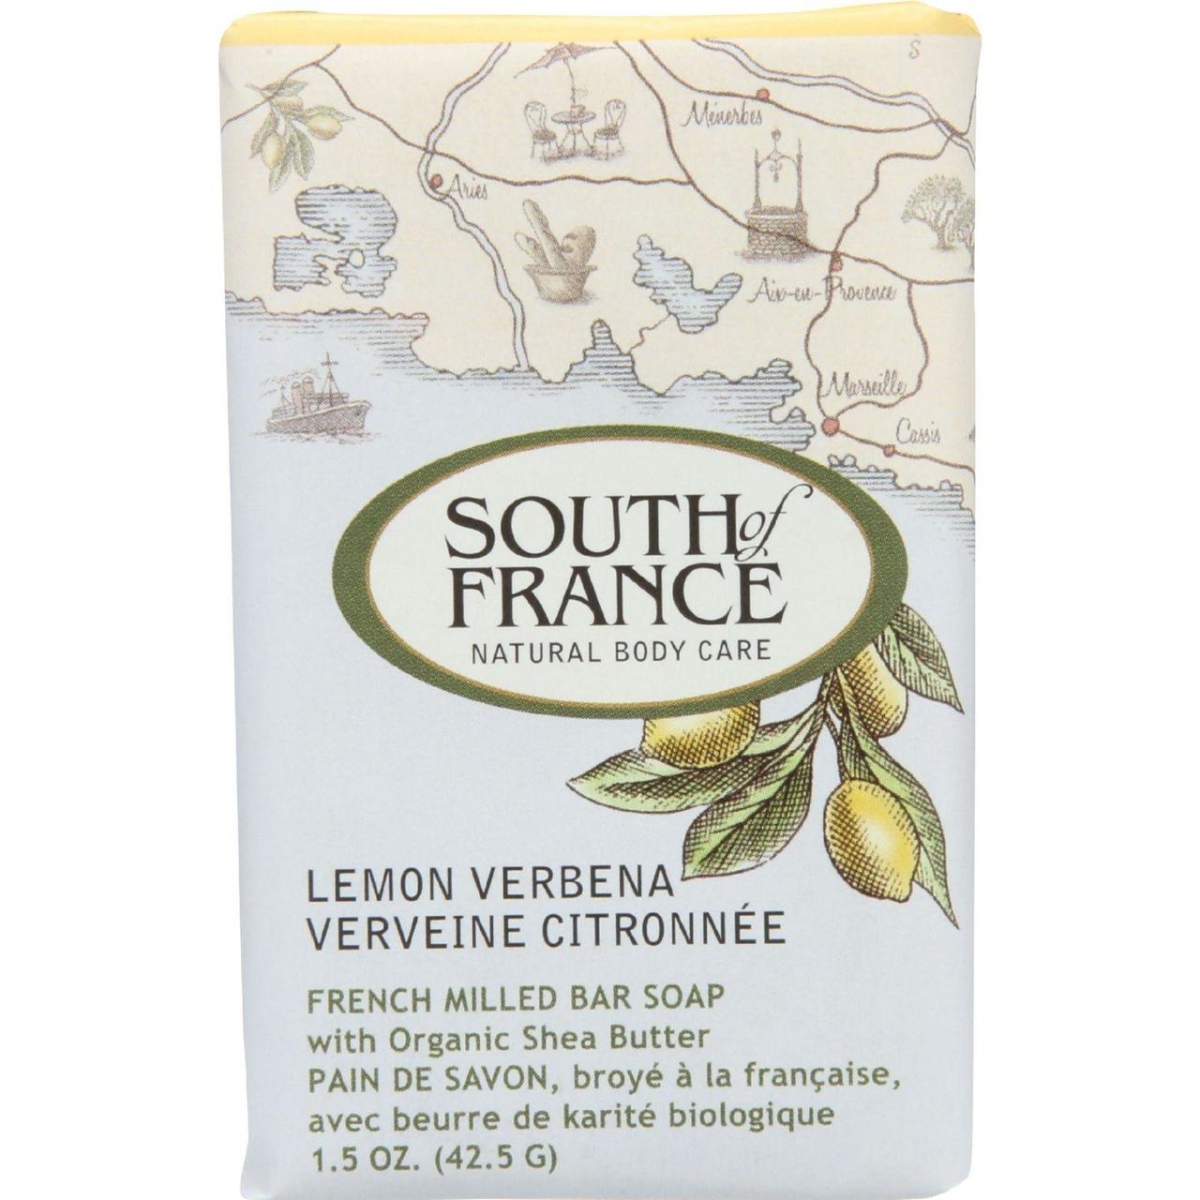 Hg1706365 1.5 Oz Travel Bar Soap - Lemon Verbena, Case Of 12